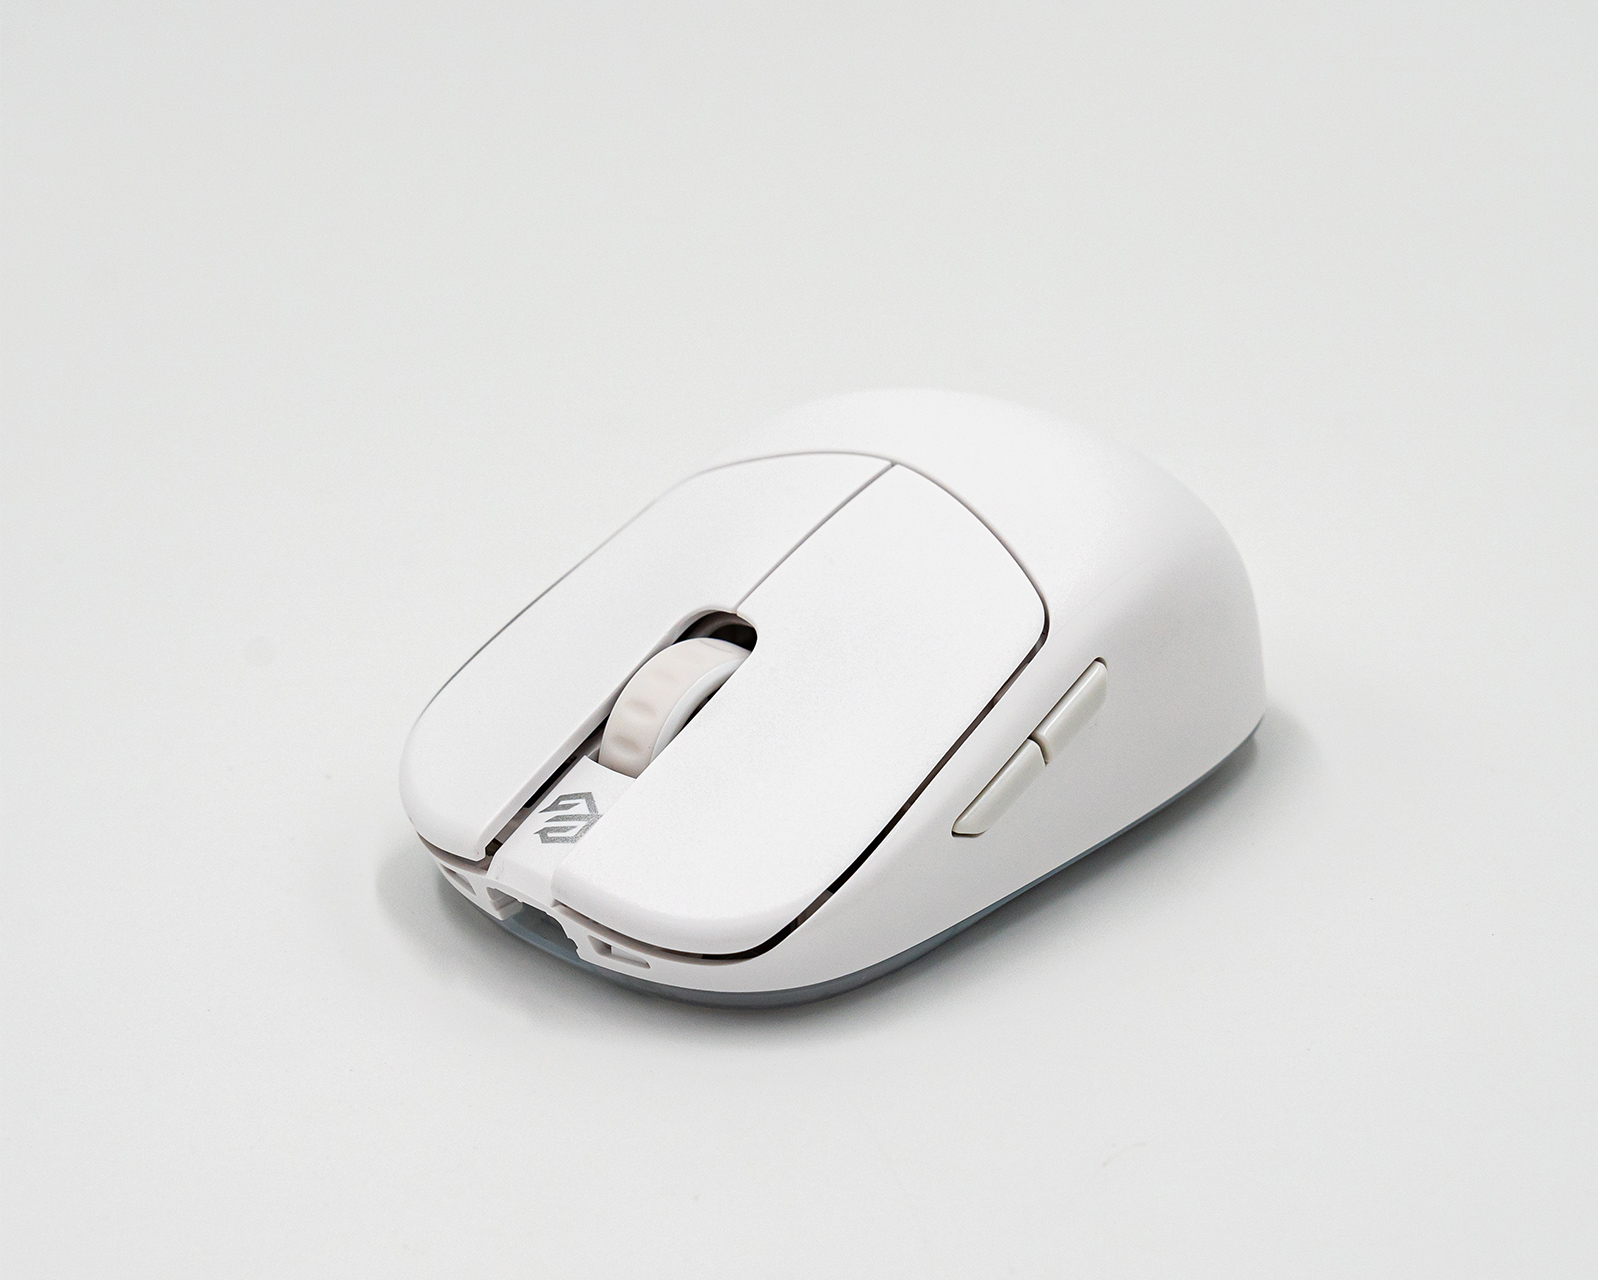 G-Wolves HSK Plus Fingertip Wireless Gaming Mouse - White - us 